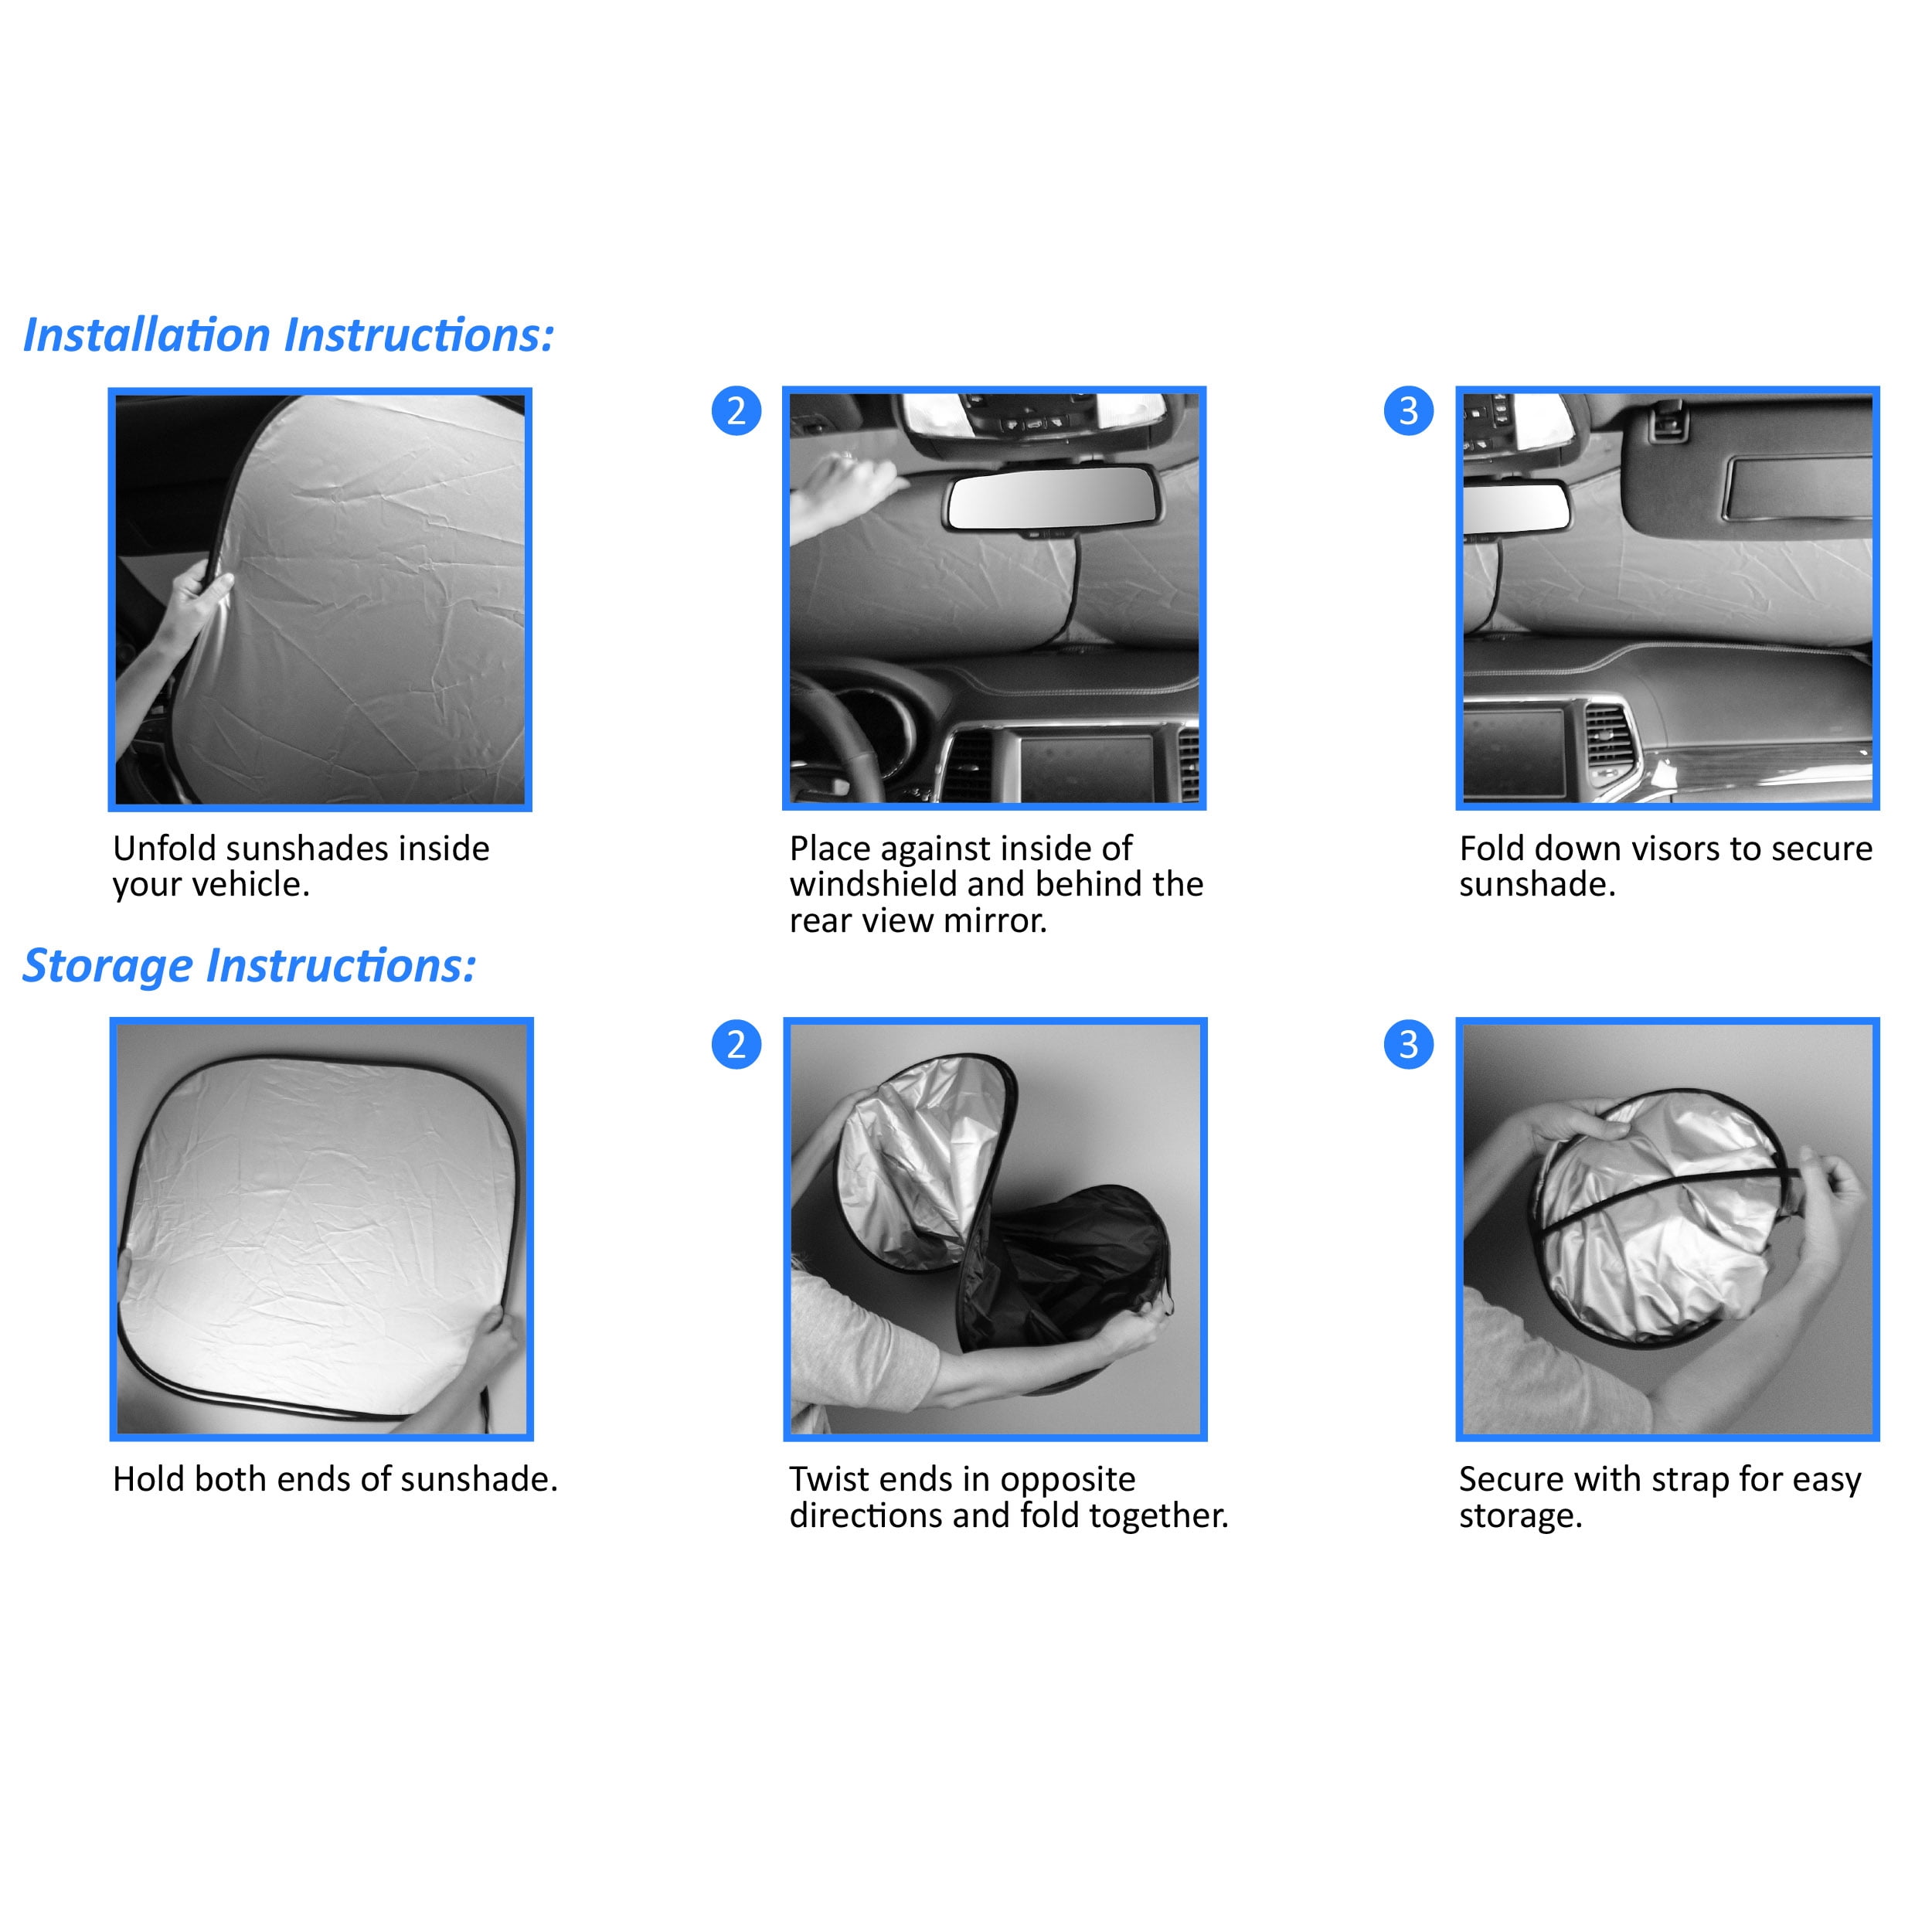 How To Install Car Sunshades